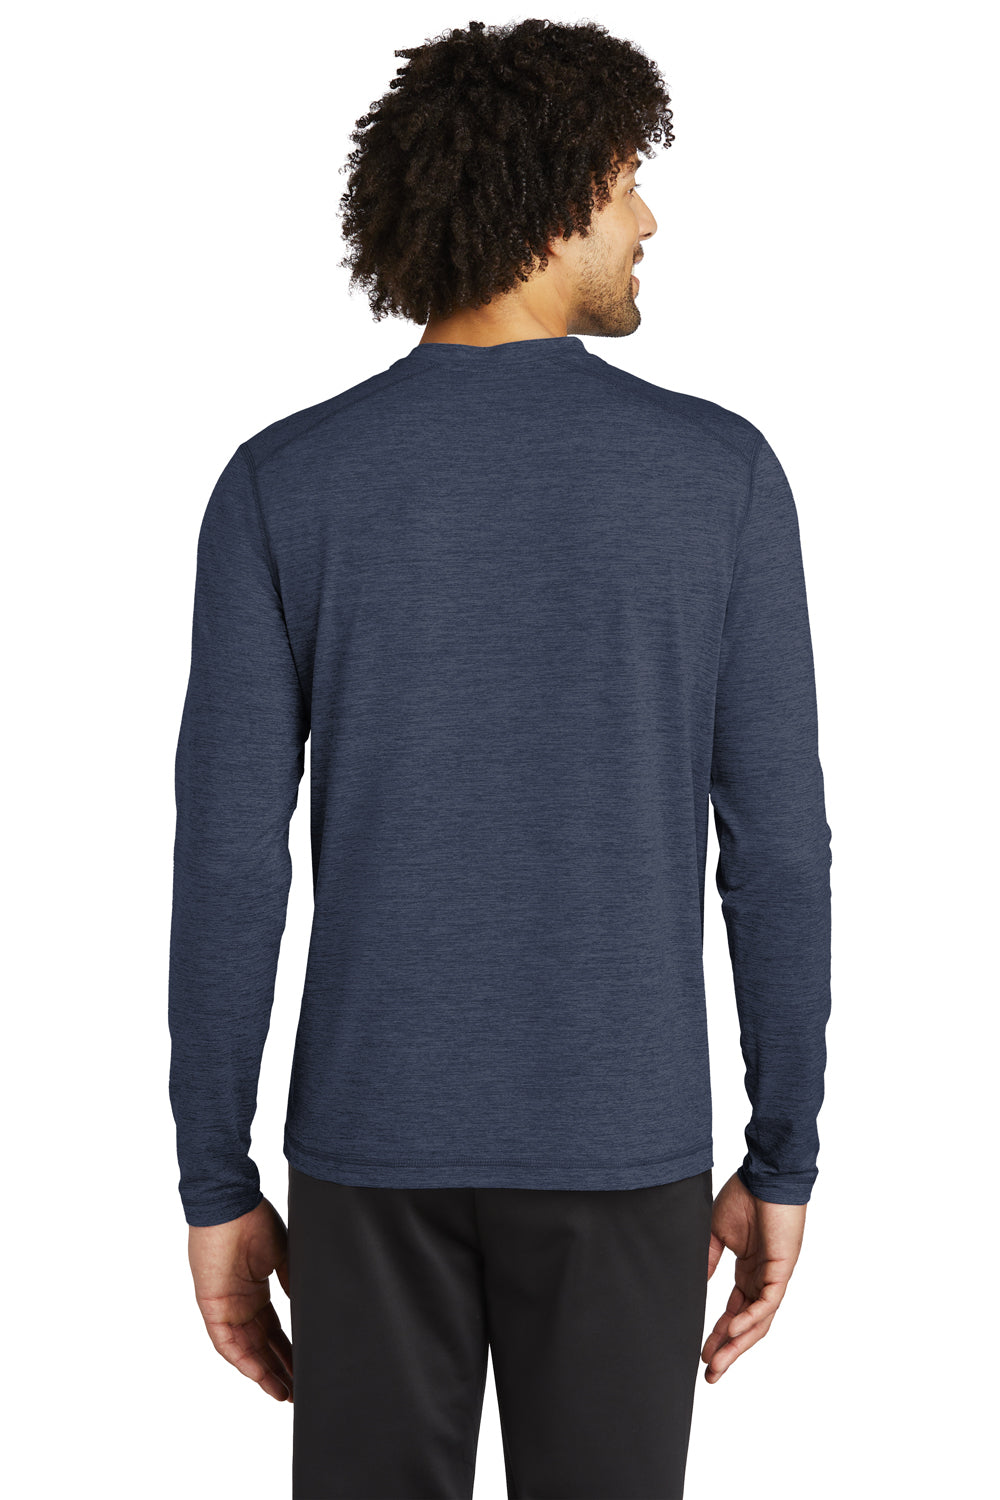 Sport-Tek Mens Exchange 1.5 Long Sleeve Crewneck T-Shirt Heather Dark Denim Blue Side